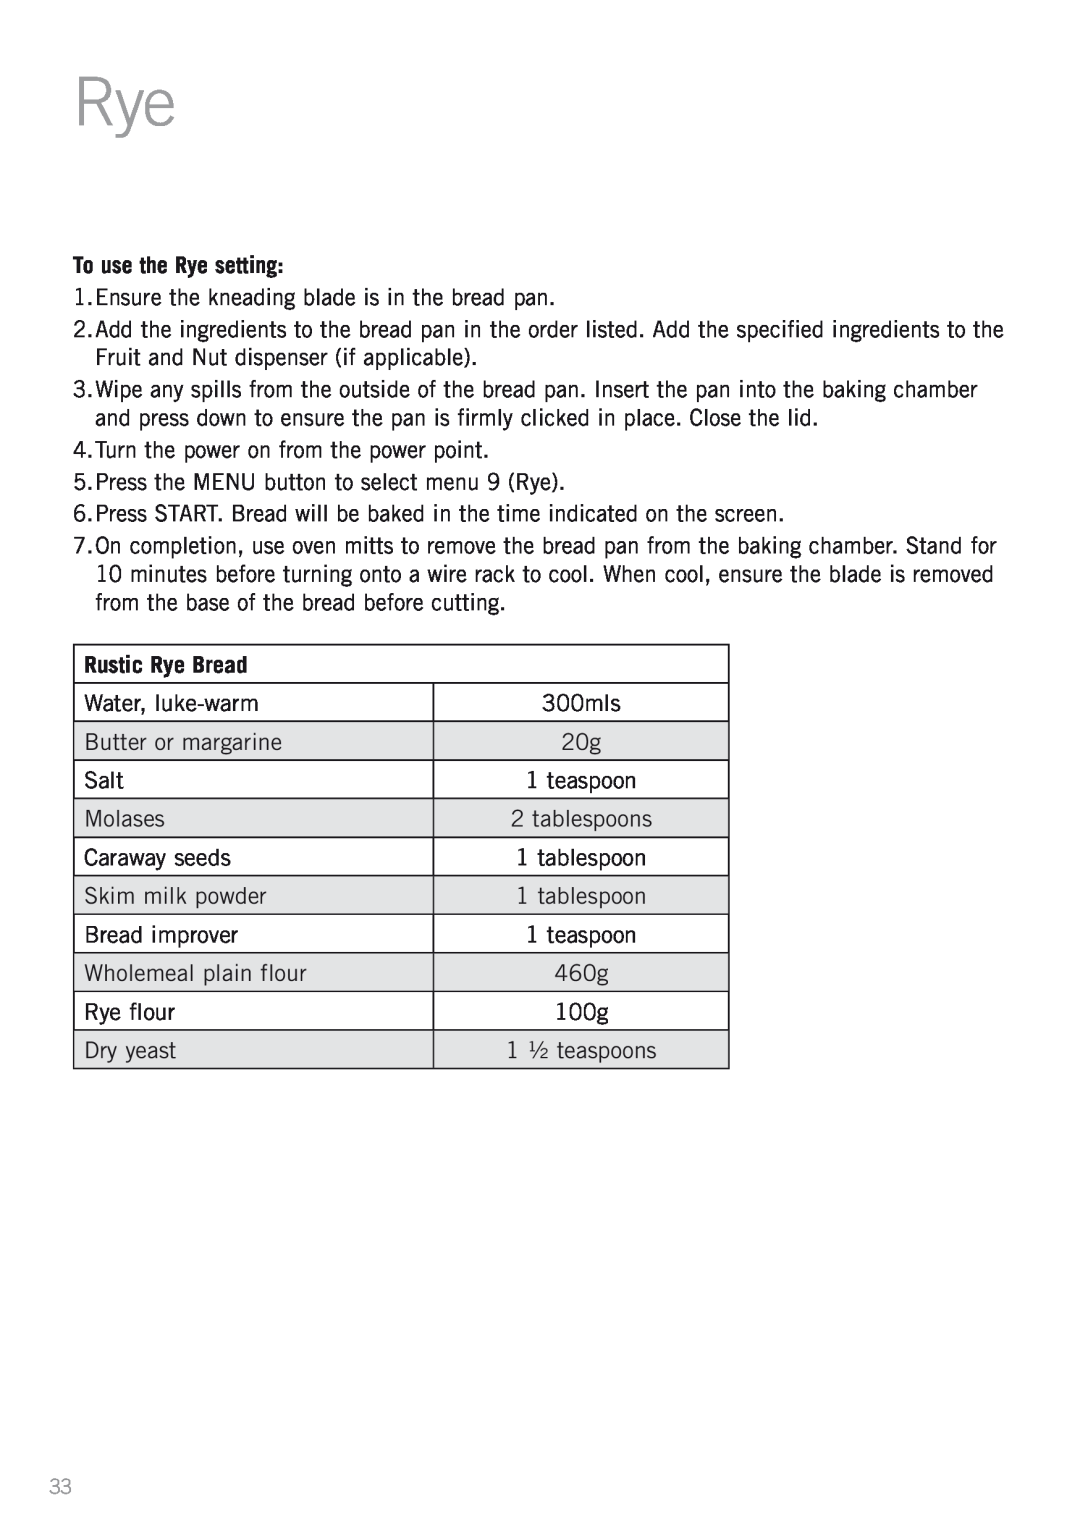 Sunbeam BM4500 manual To use the Rye setting, Rustic Rye Bread 